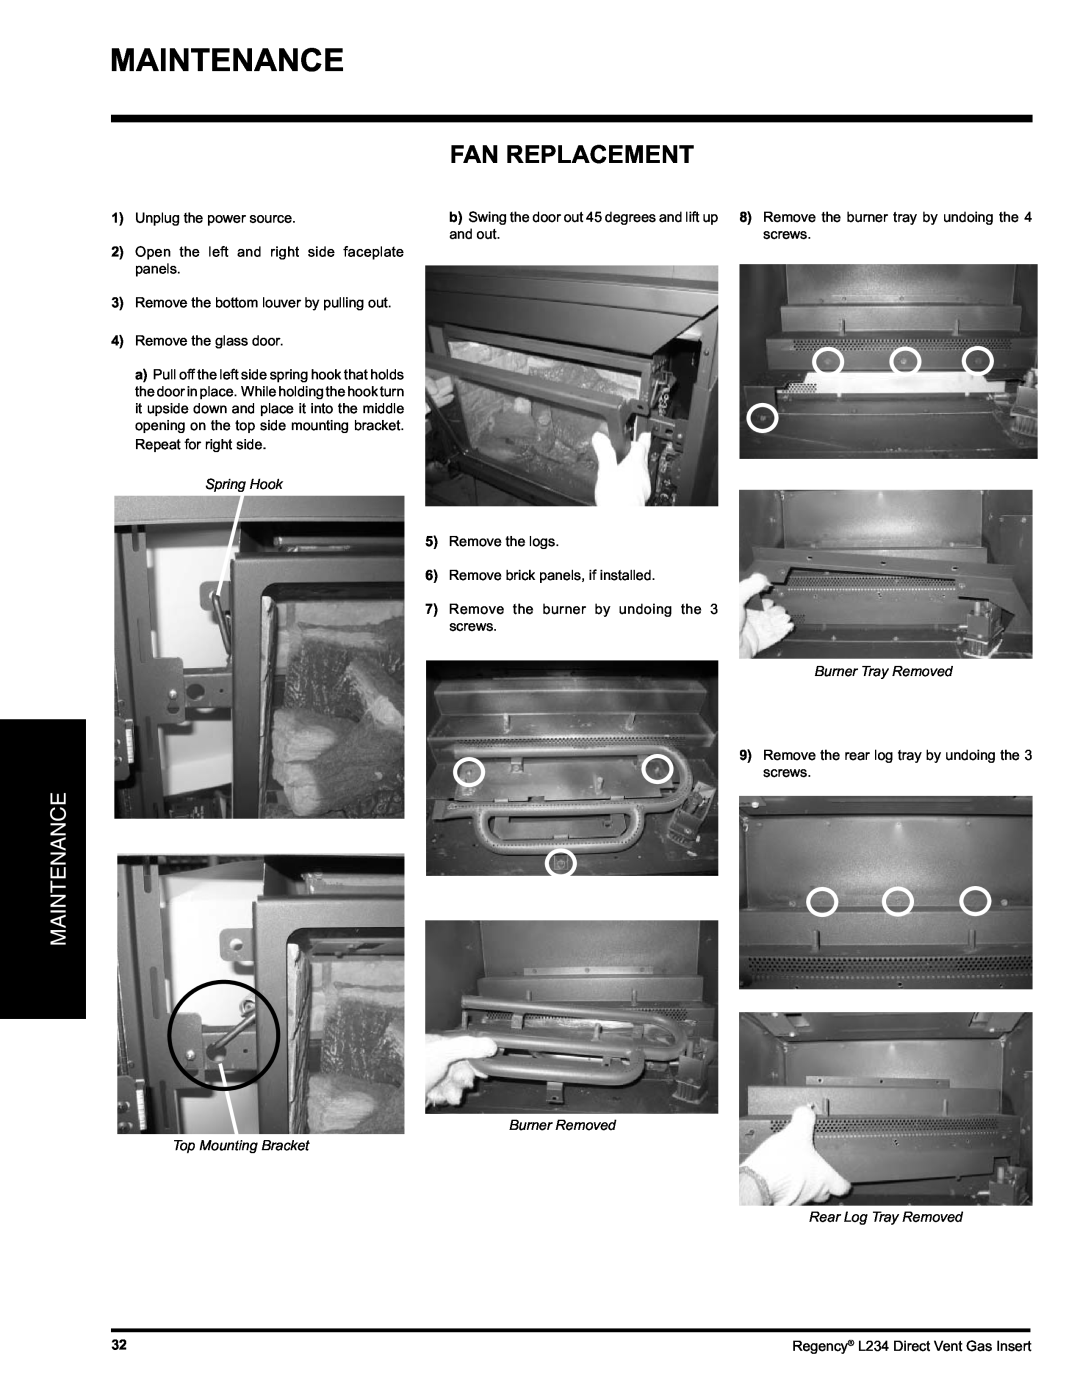 Regency L234-LP Maintenance, Fan Replacement, Spring Hook, Burner Tray Removed, Burner Removed Top Mounting Bracket 